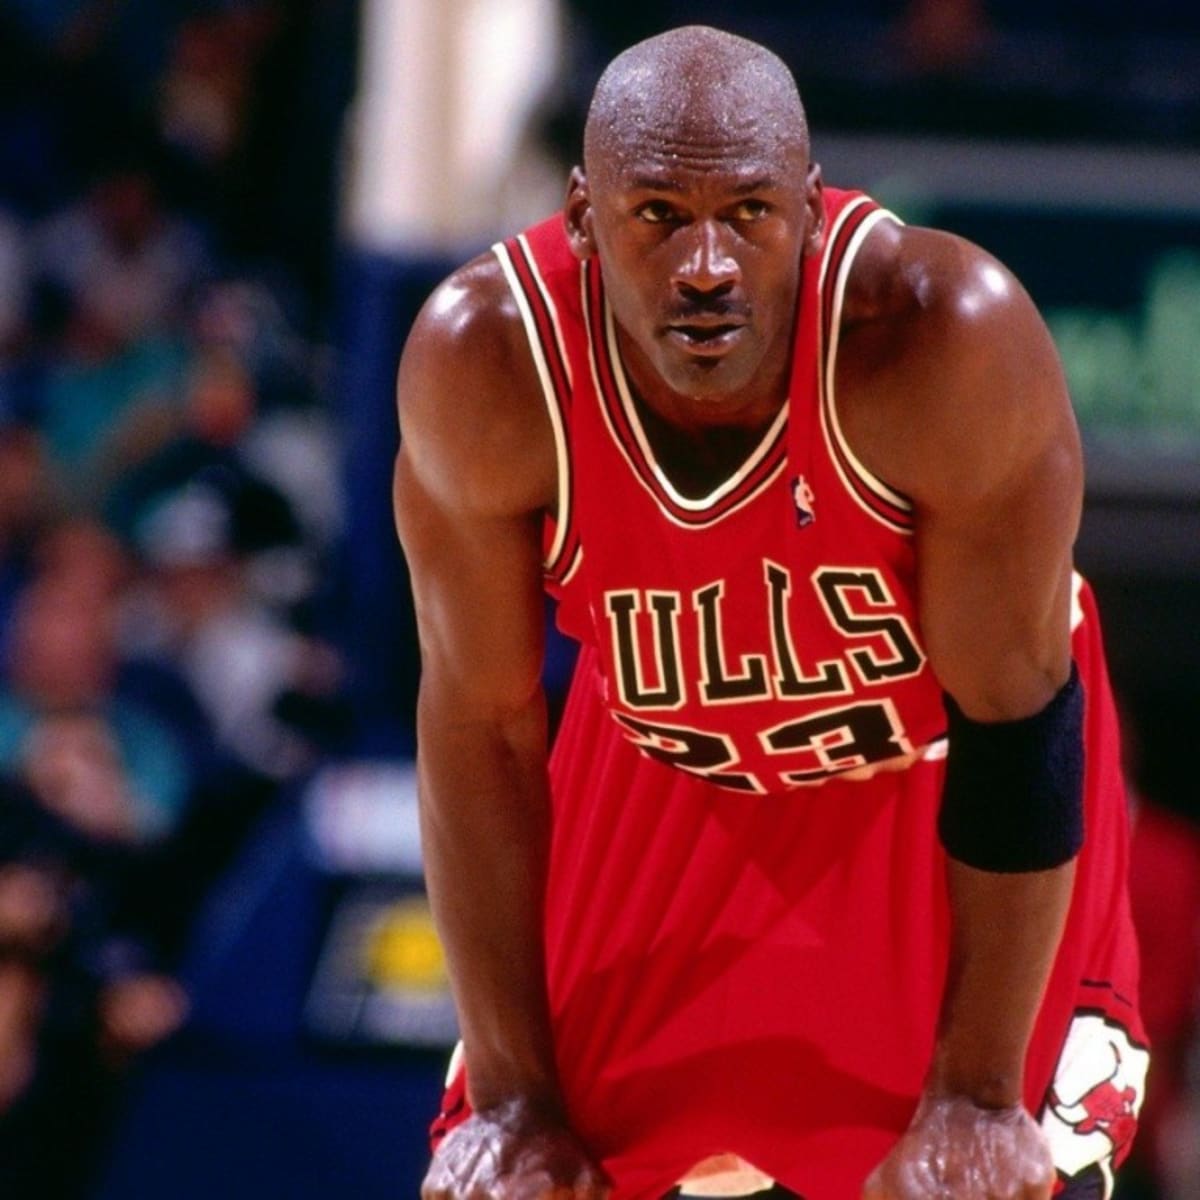 The Last Dance: Did Michael Jordan or LeBron James face tougher